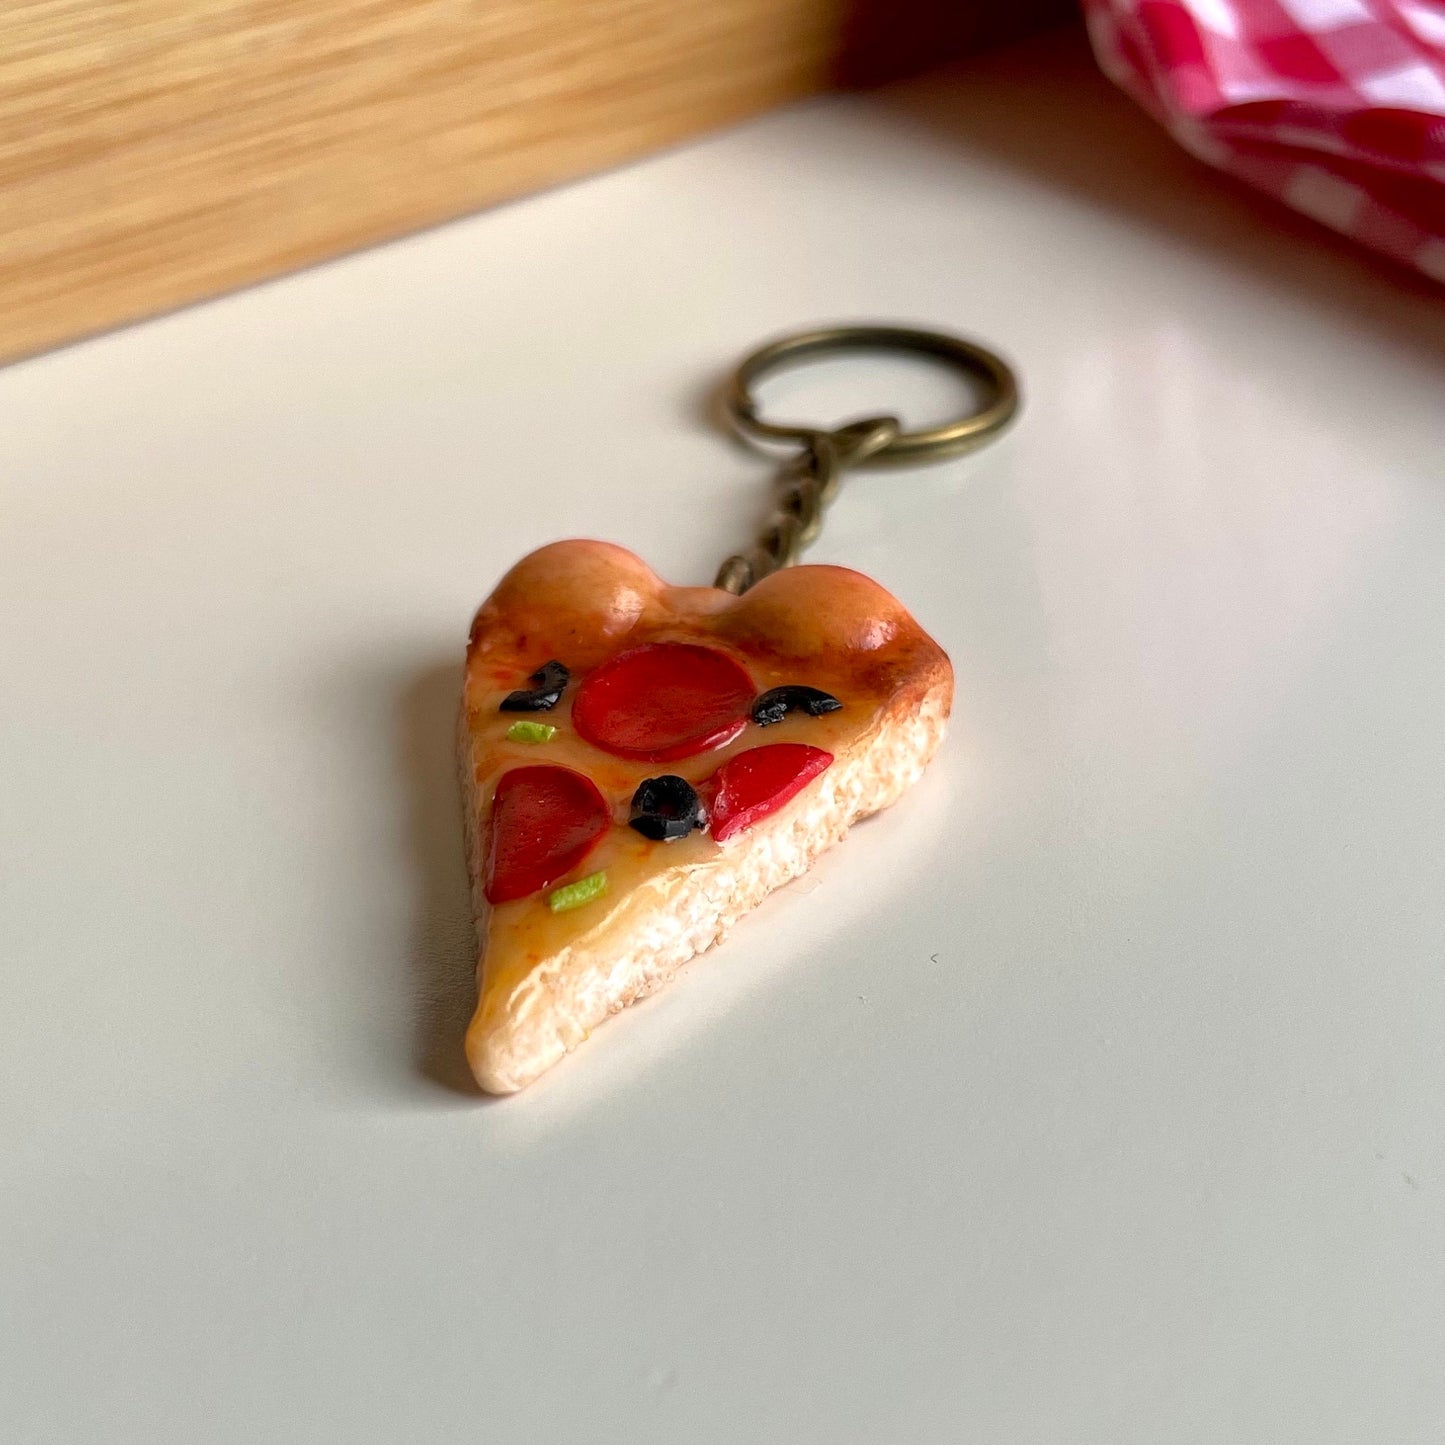 Pizza keychain, cute pizza charm, pizza keyring, cute novelty keychain, polymerclay charm, clay keyring, realistic food, miniature food